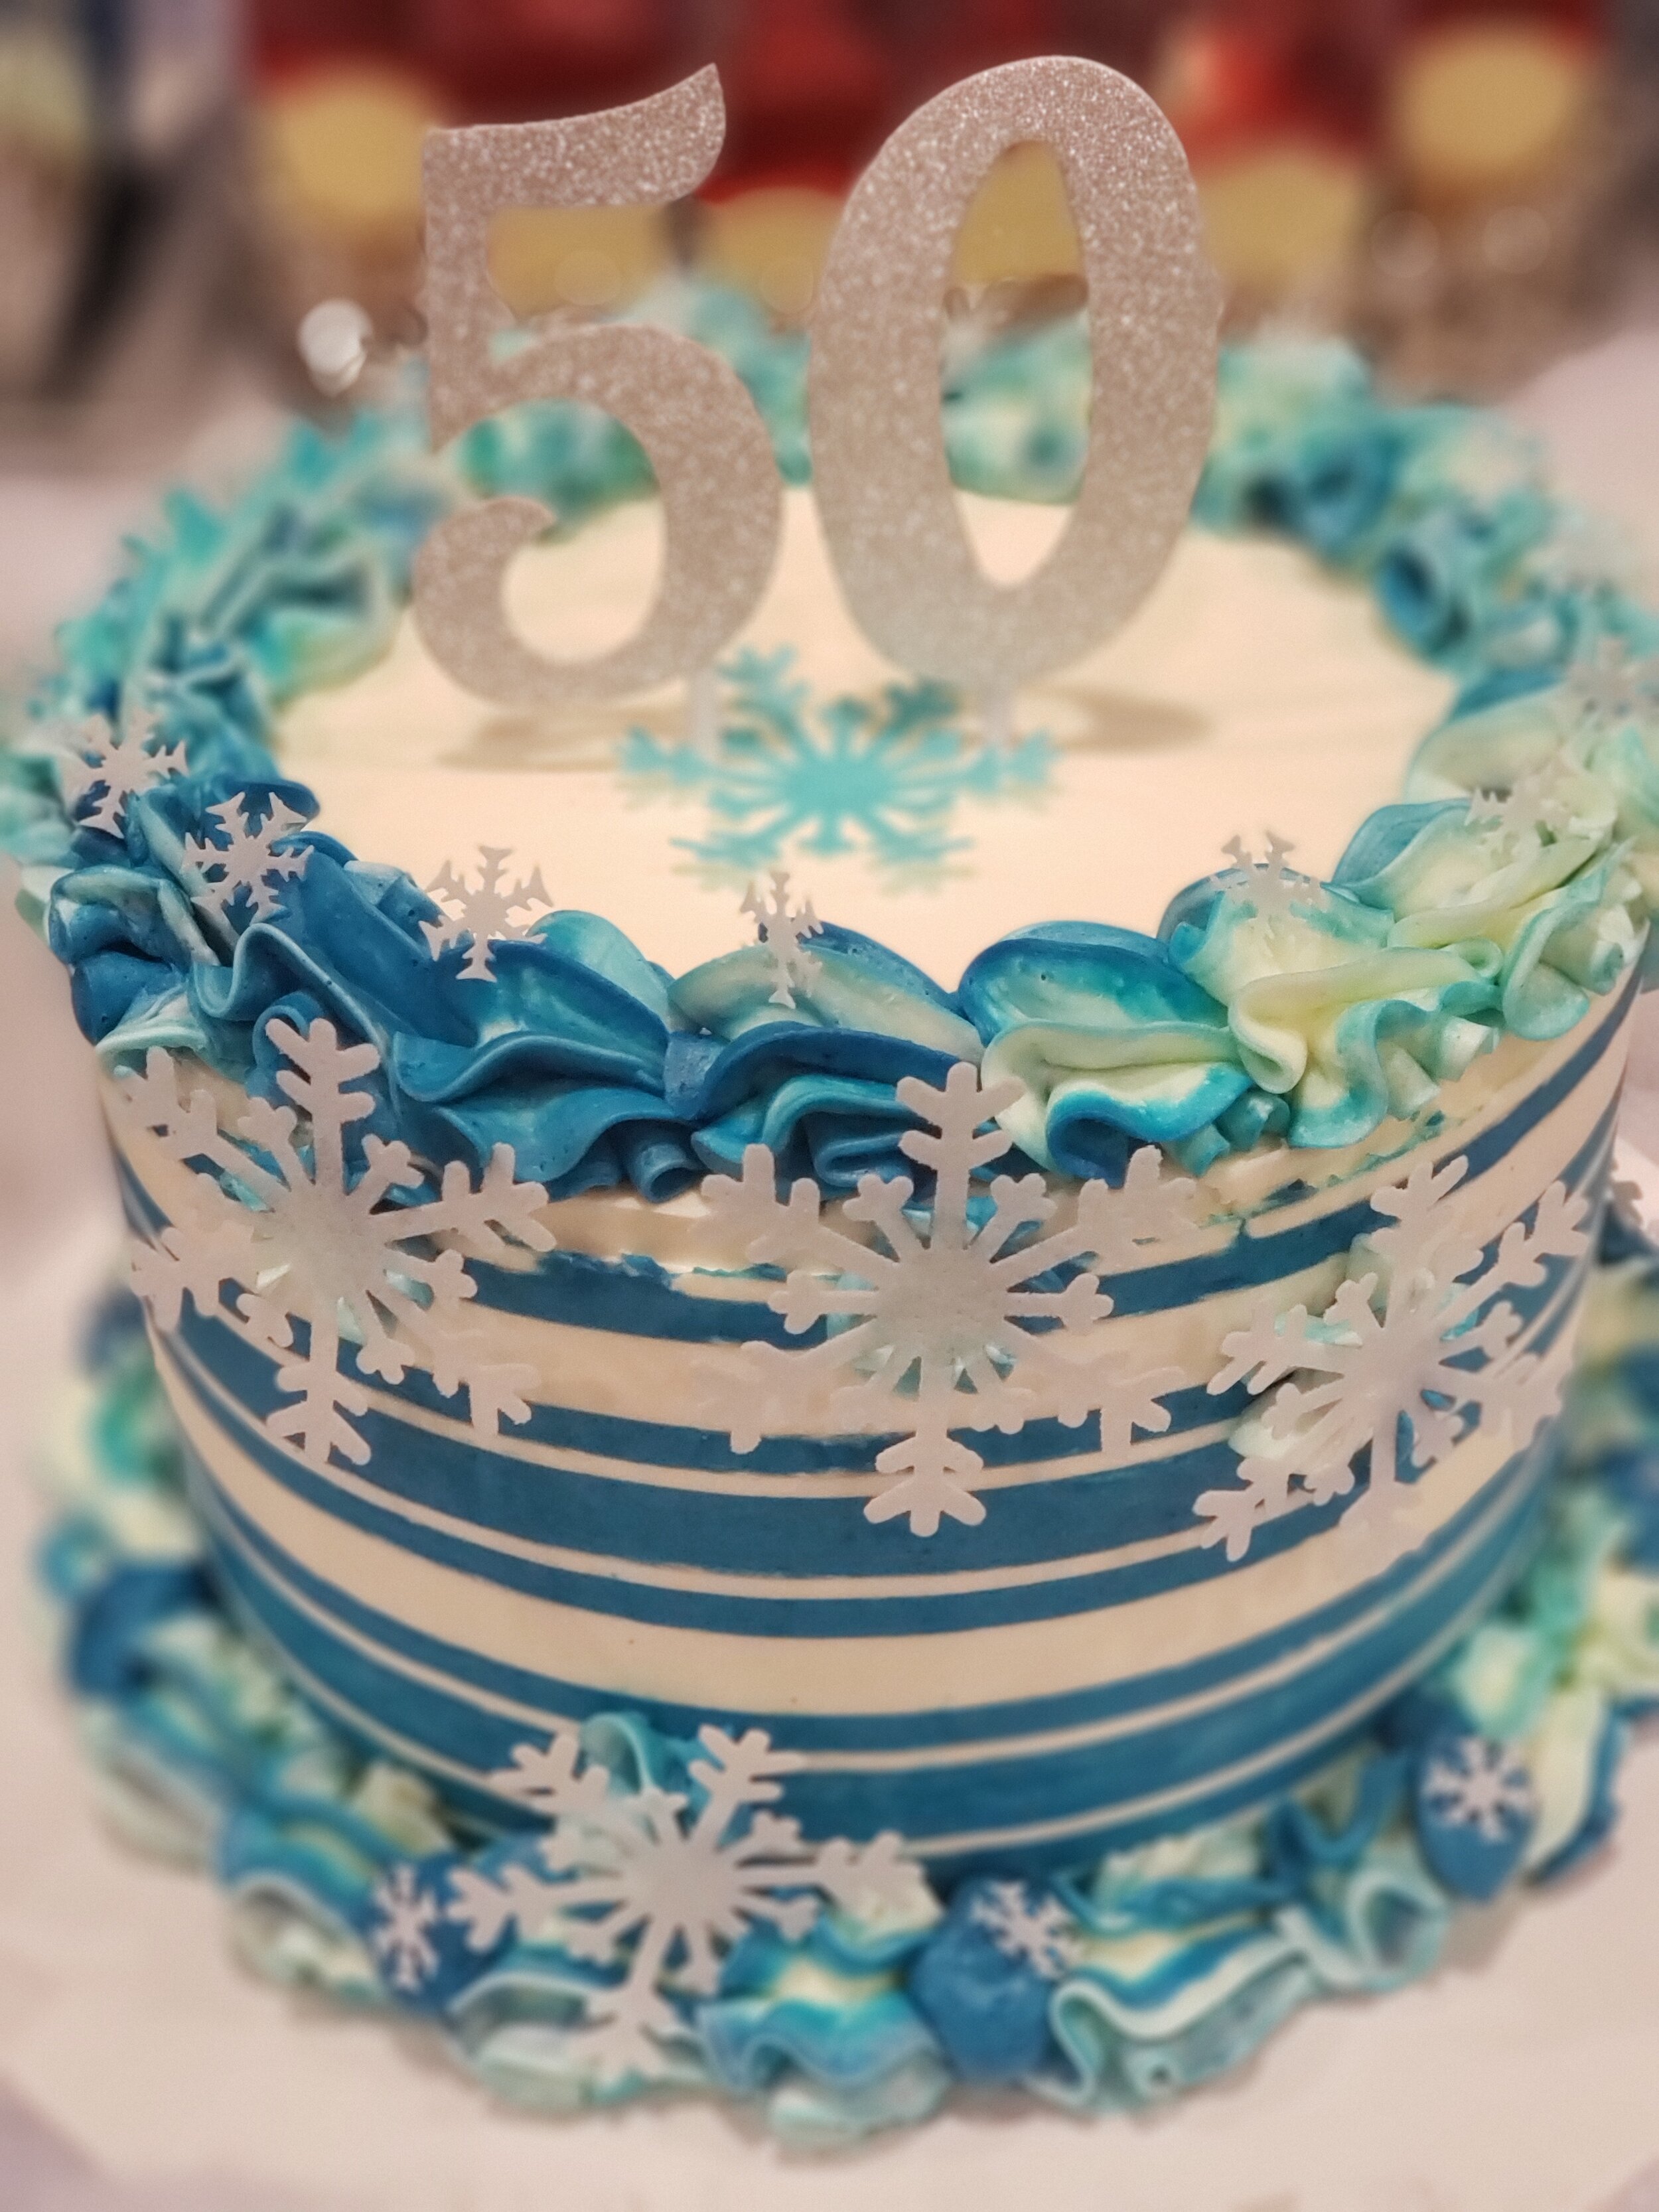 Chicago_Bakery-Winter-Birthday_cake.jpg